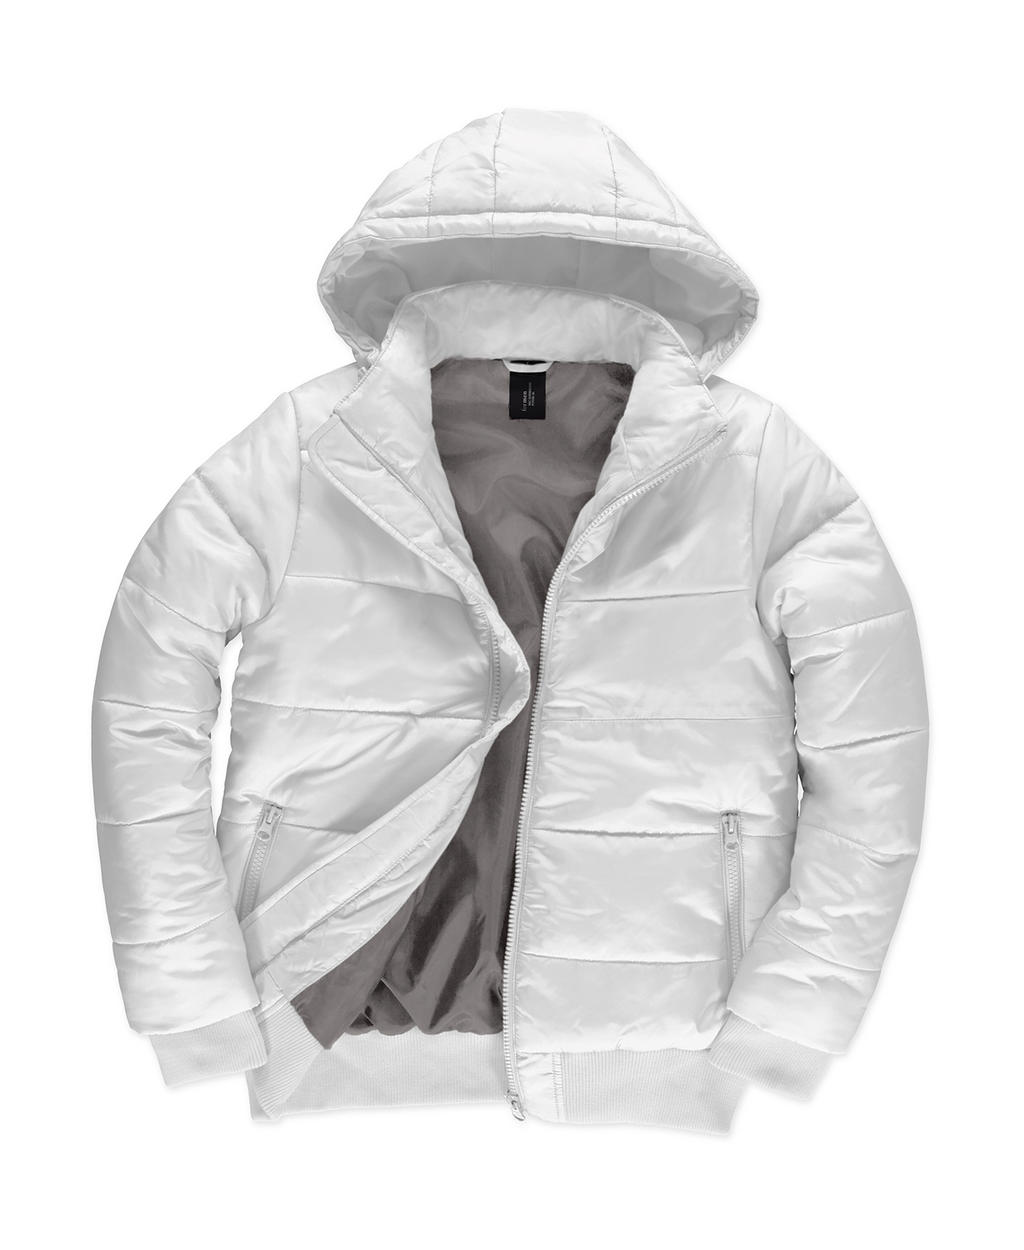  Superhood/men Jacket in Farbe White/Warm Grey